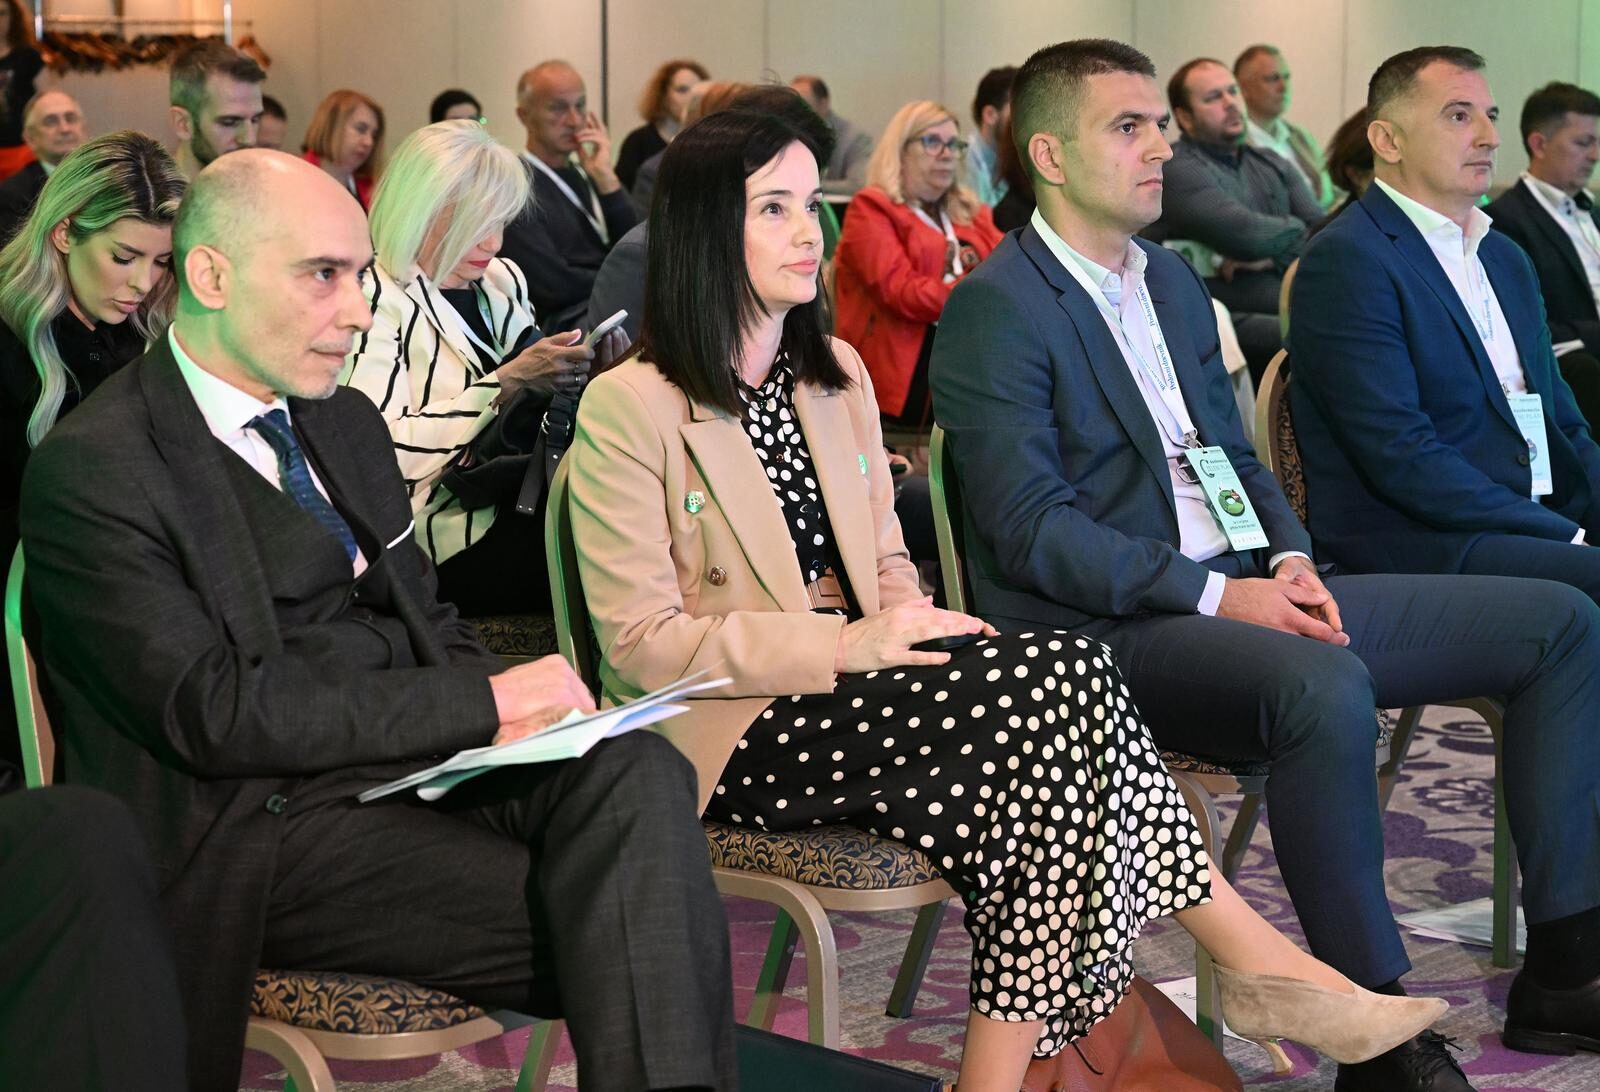 Zagreb: Održana je konferencija Zeleni plan u hrvatskoj poljoprivredi